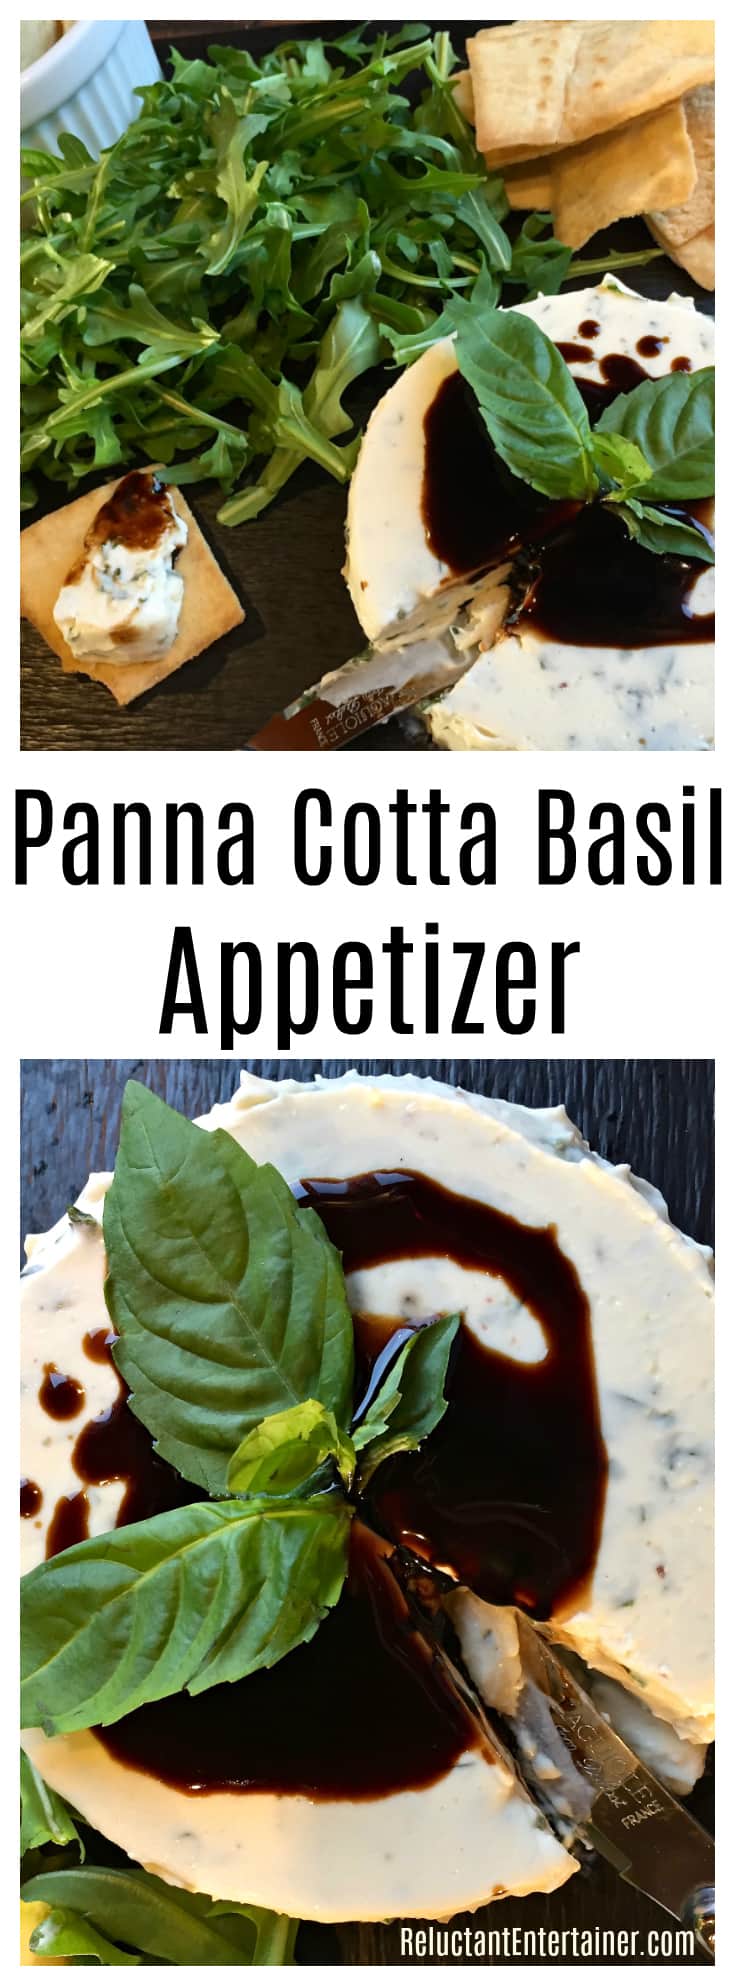 Panna Cotta Basil Appetizer Recipe